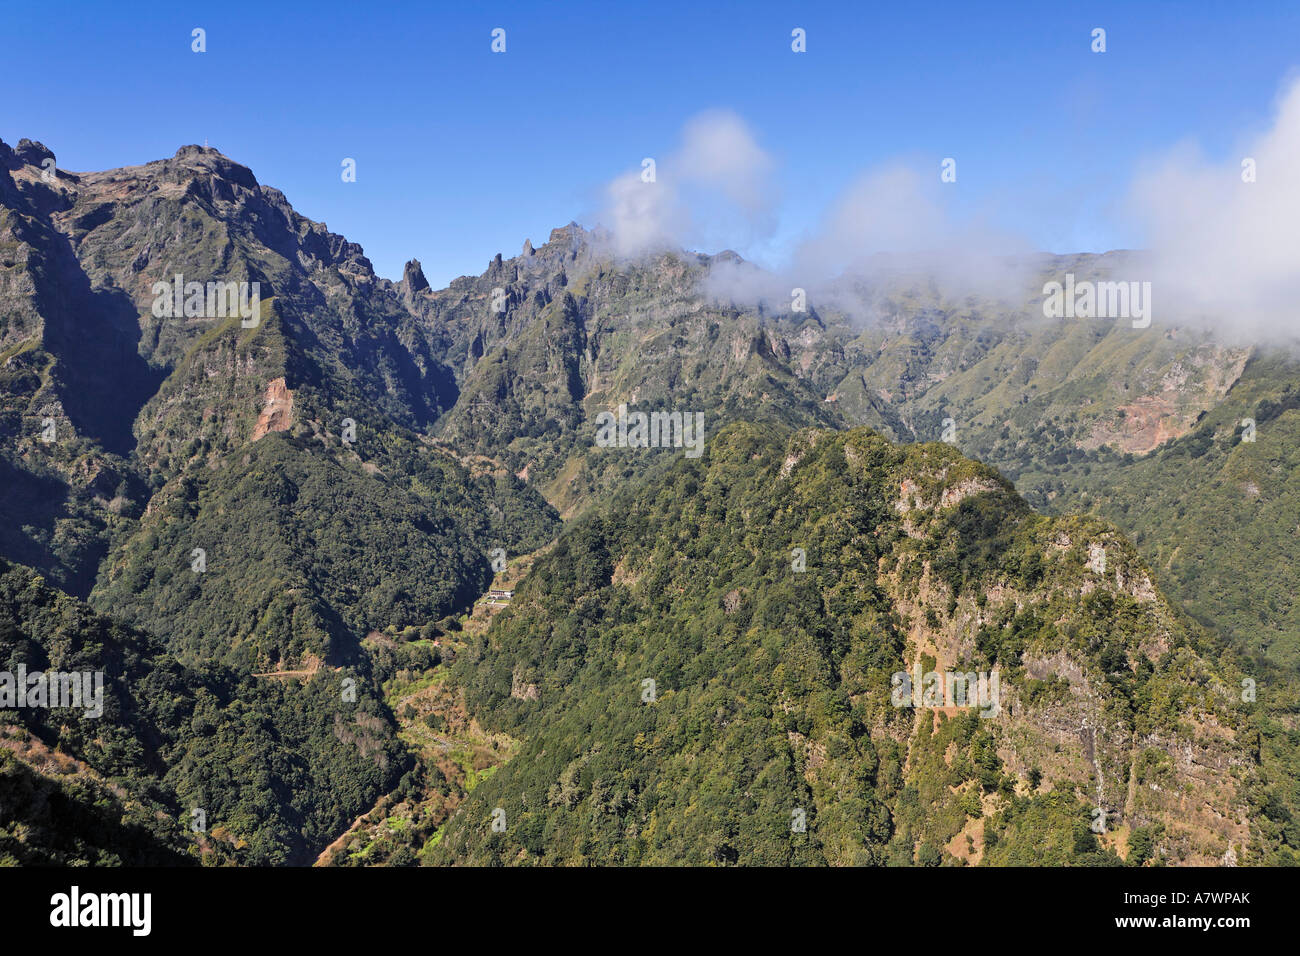 View to the central mountain range (Pico do Arieiro) from the viewing point Balcoes, Ribeiro Firo, Madeira, Portugal Stock Photo